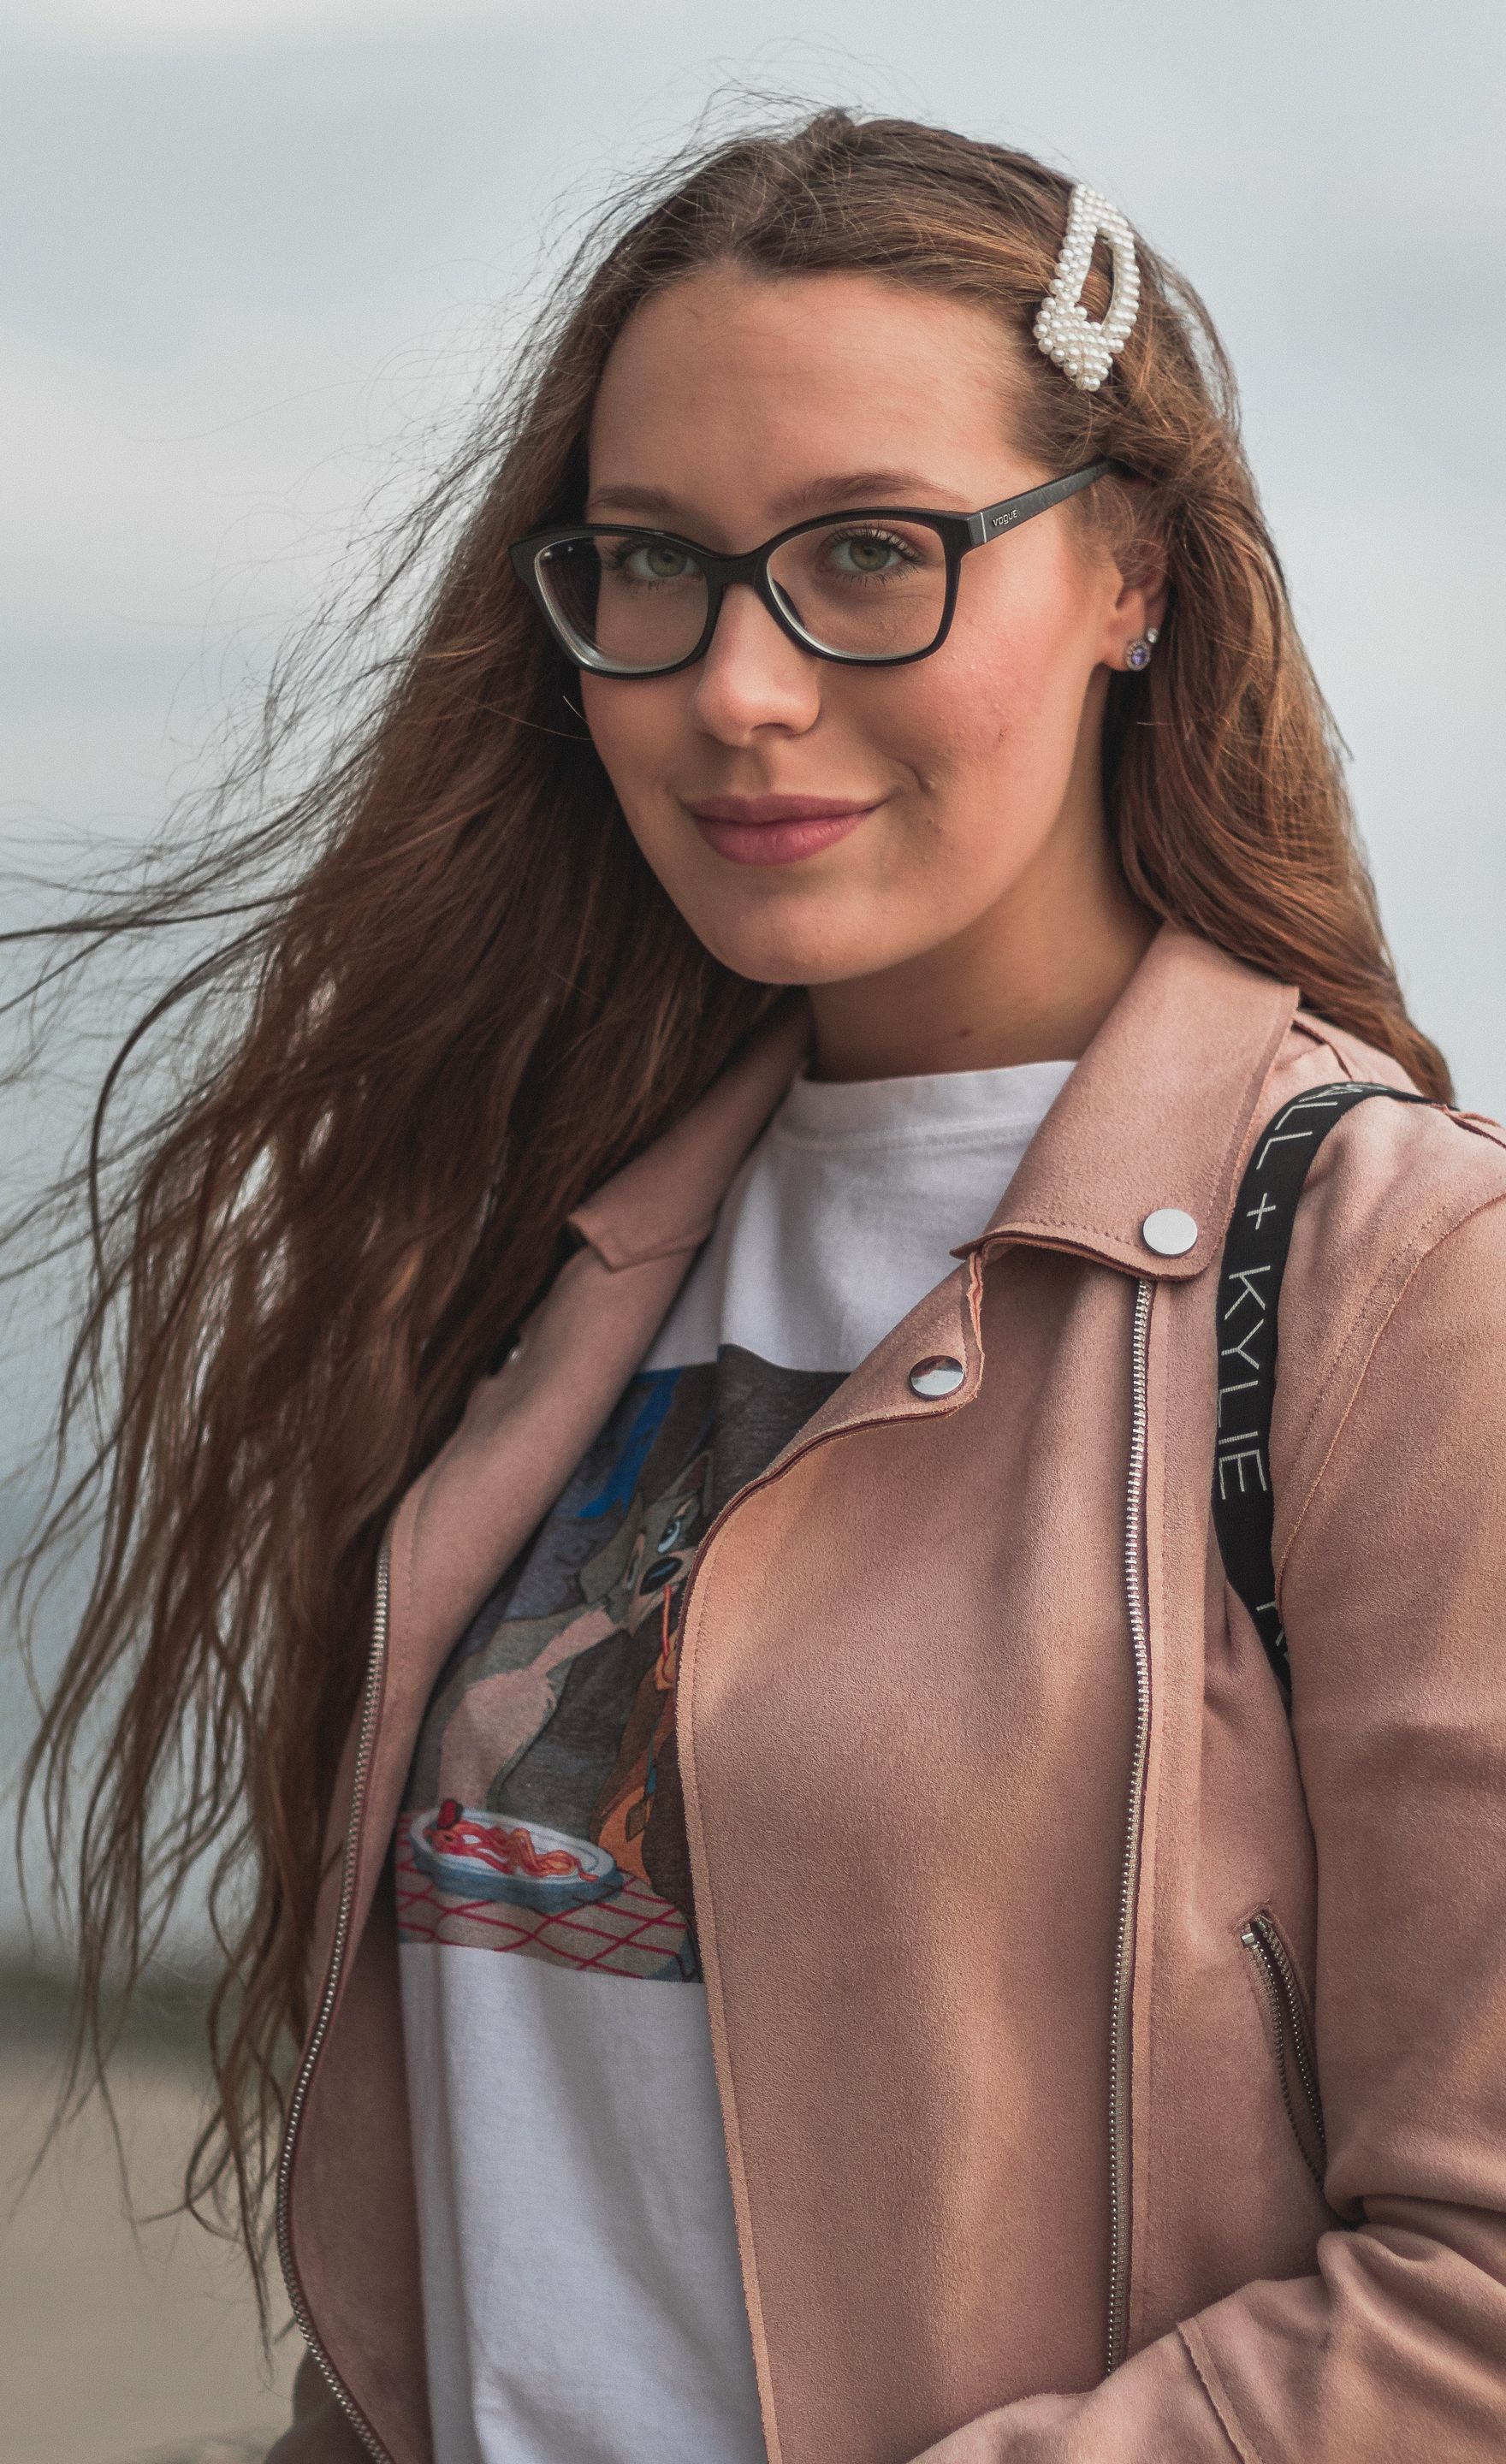 woman wearing glasses